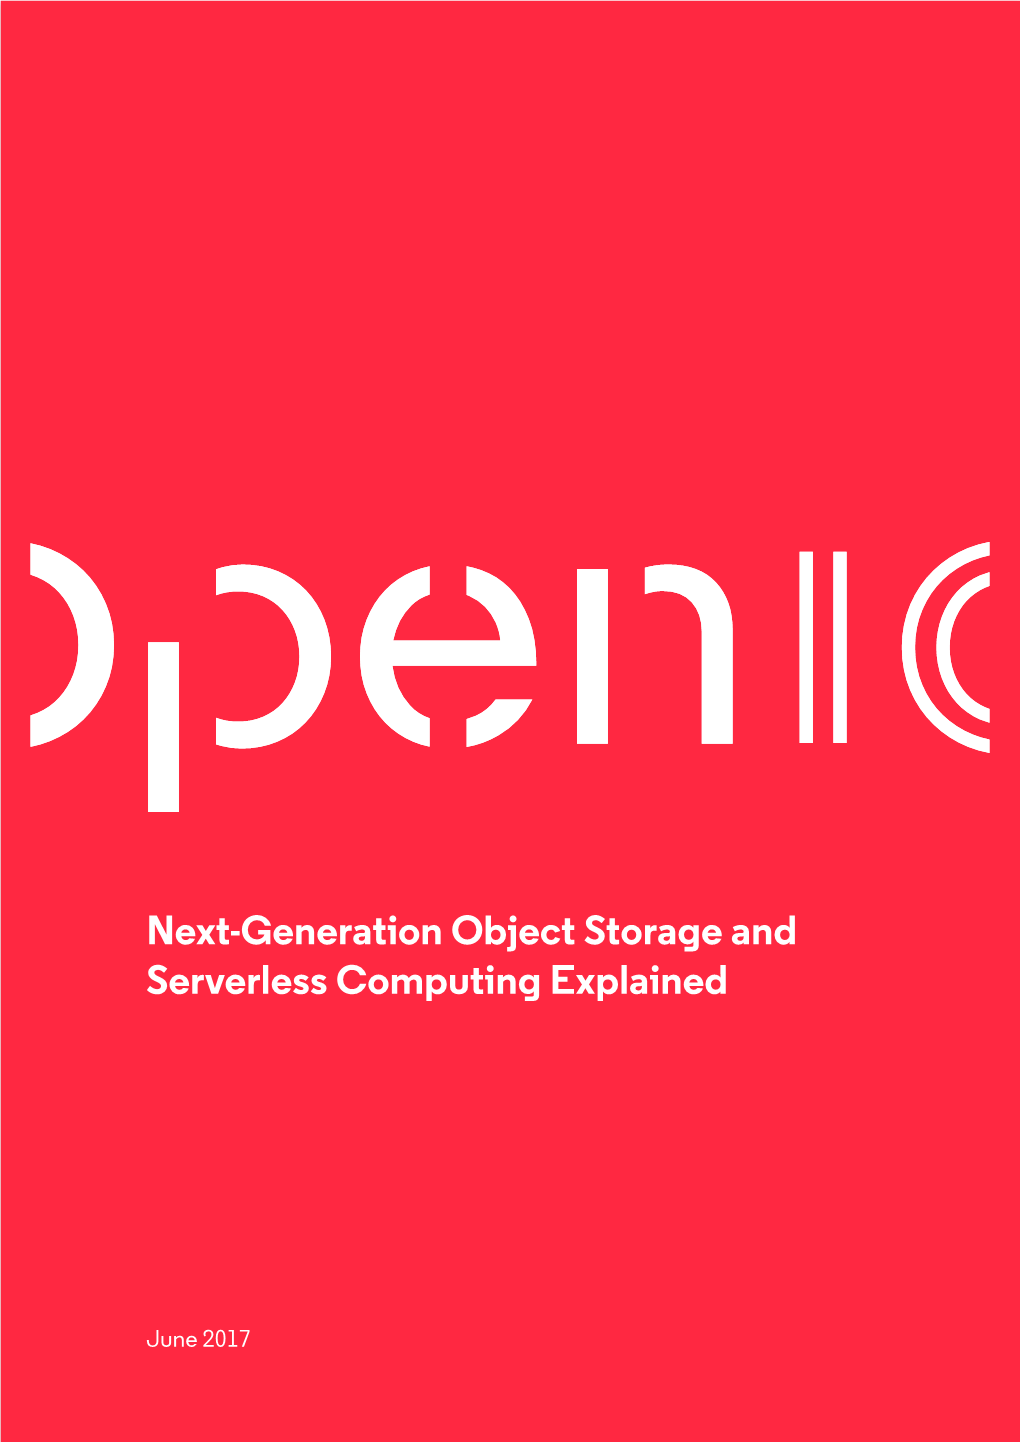 Next-Generation Object Storage and Serverless Computing Explained